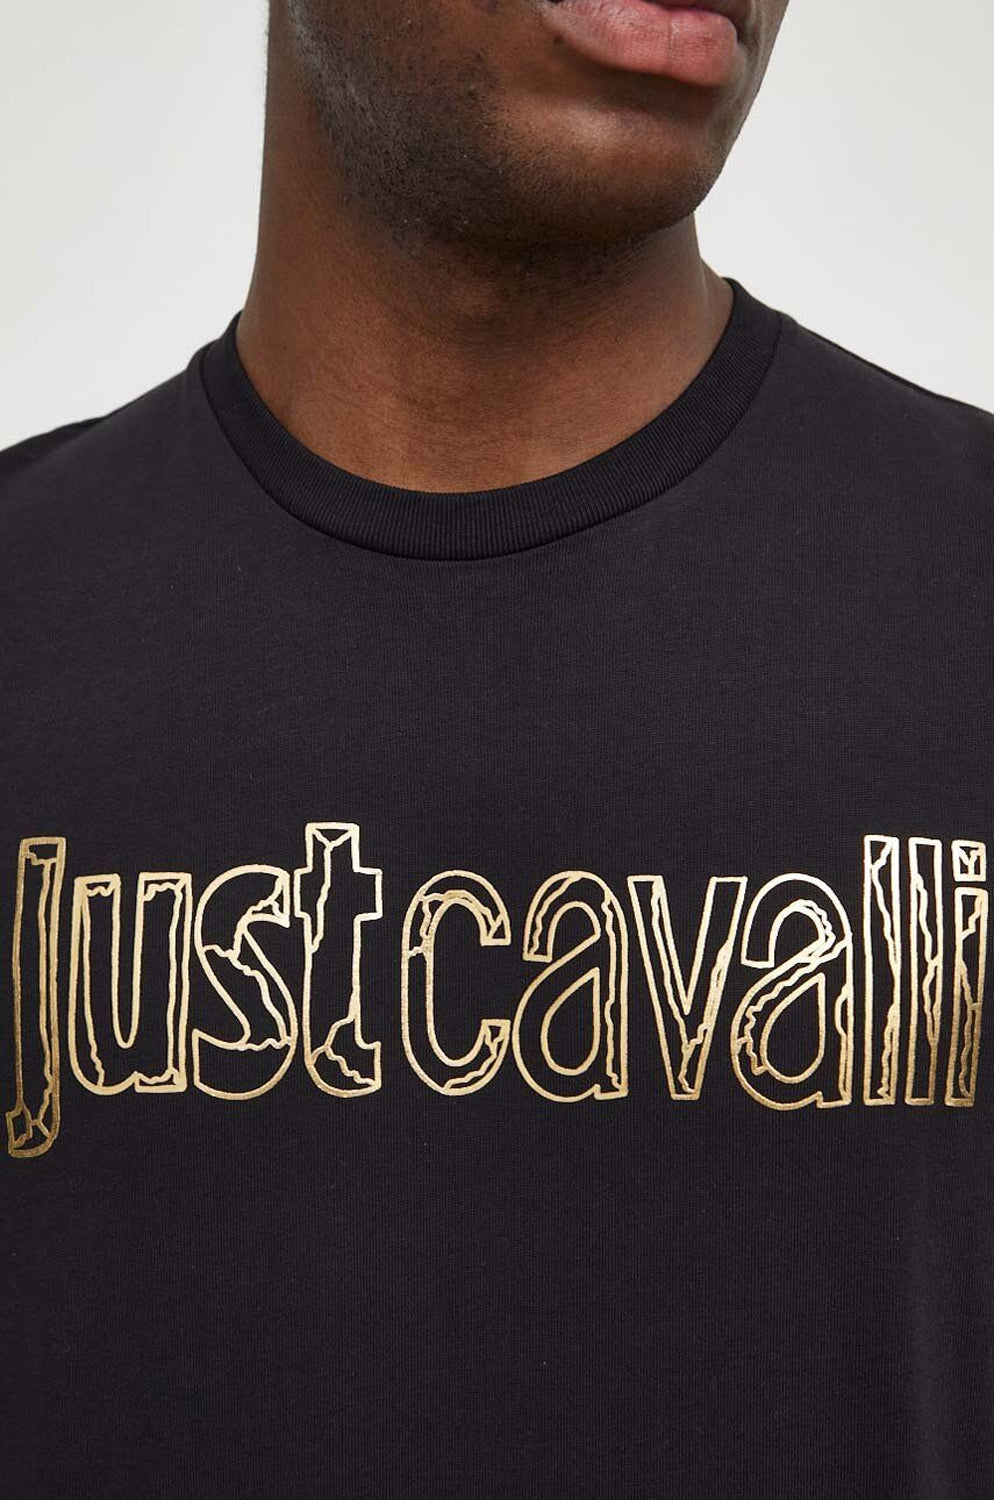 Just Cavalli T Shirt 76oahg15 Blk Gold Preto Ouro_shot3